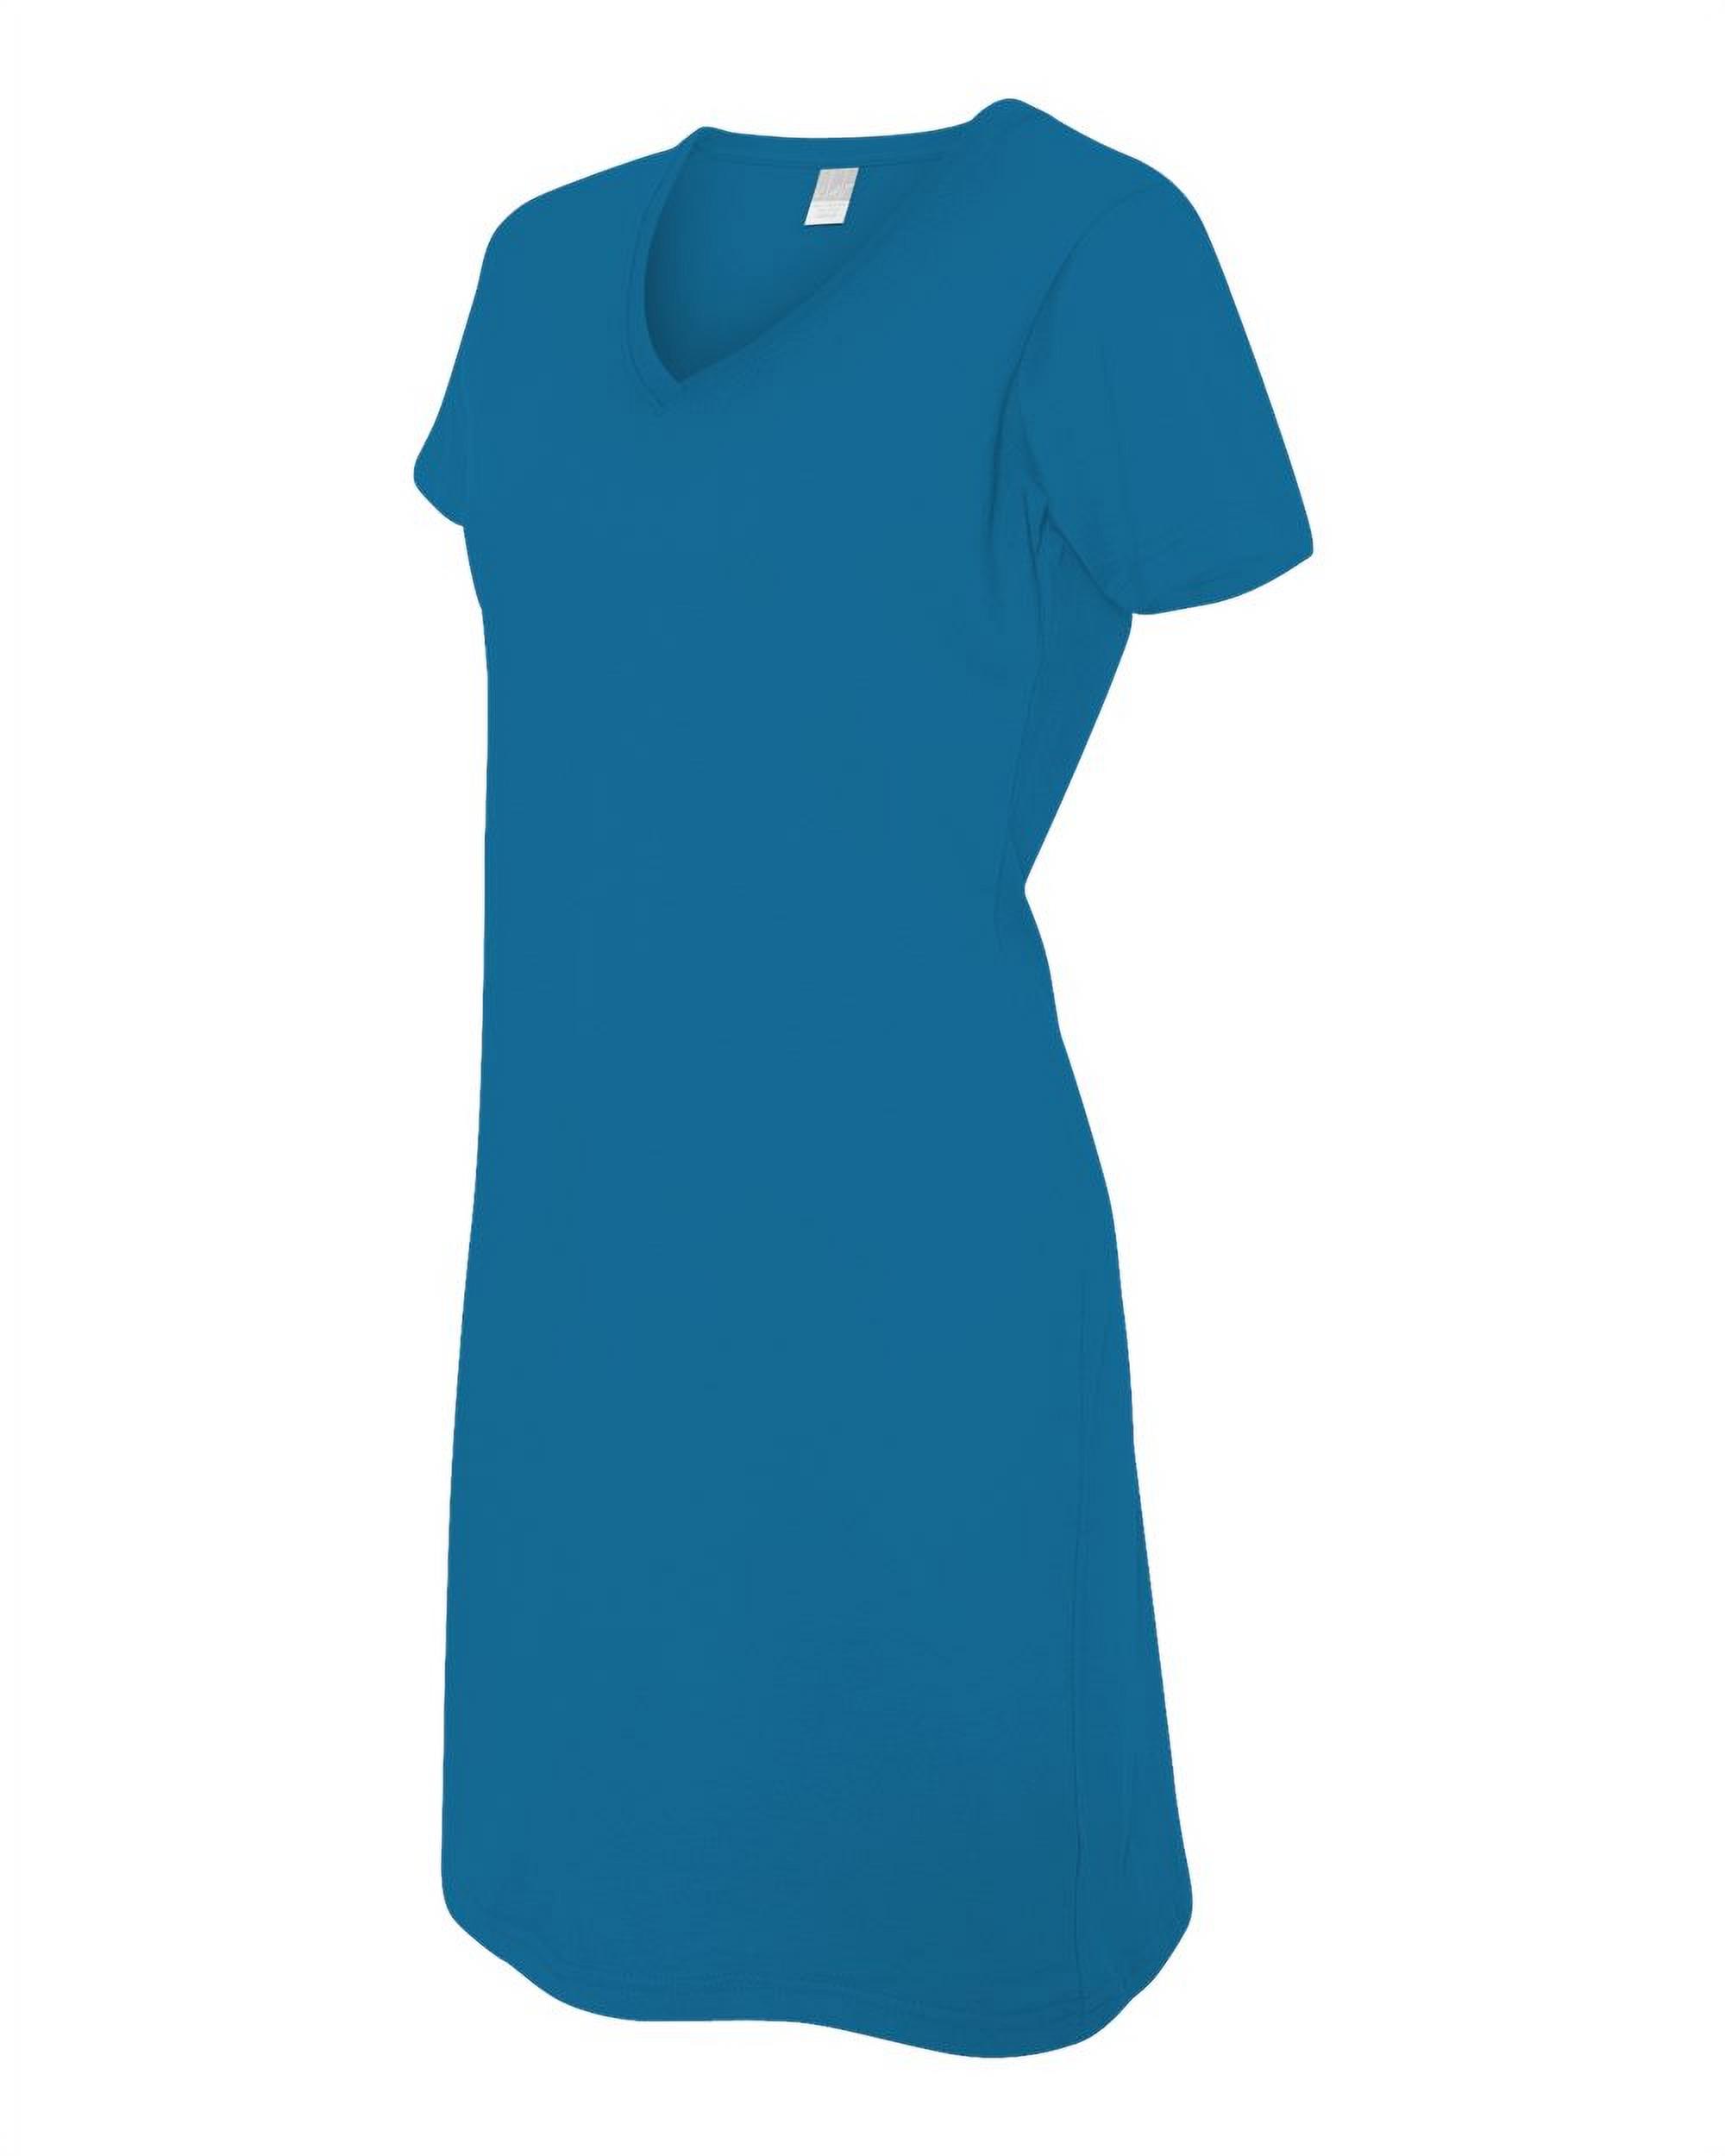 LAT - Women's Fine Jersey V-Neck Coverup - 3522 - Cobalt - Size: L/XL - image 2 of 5